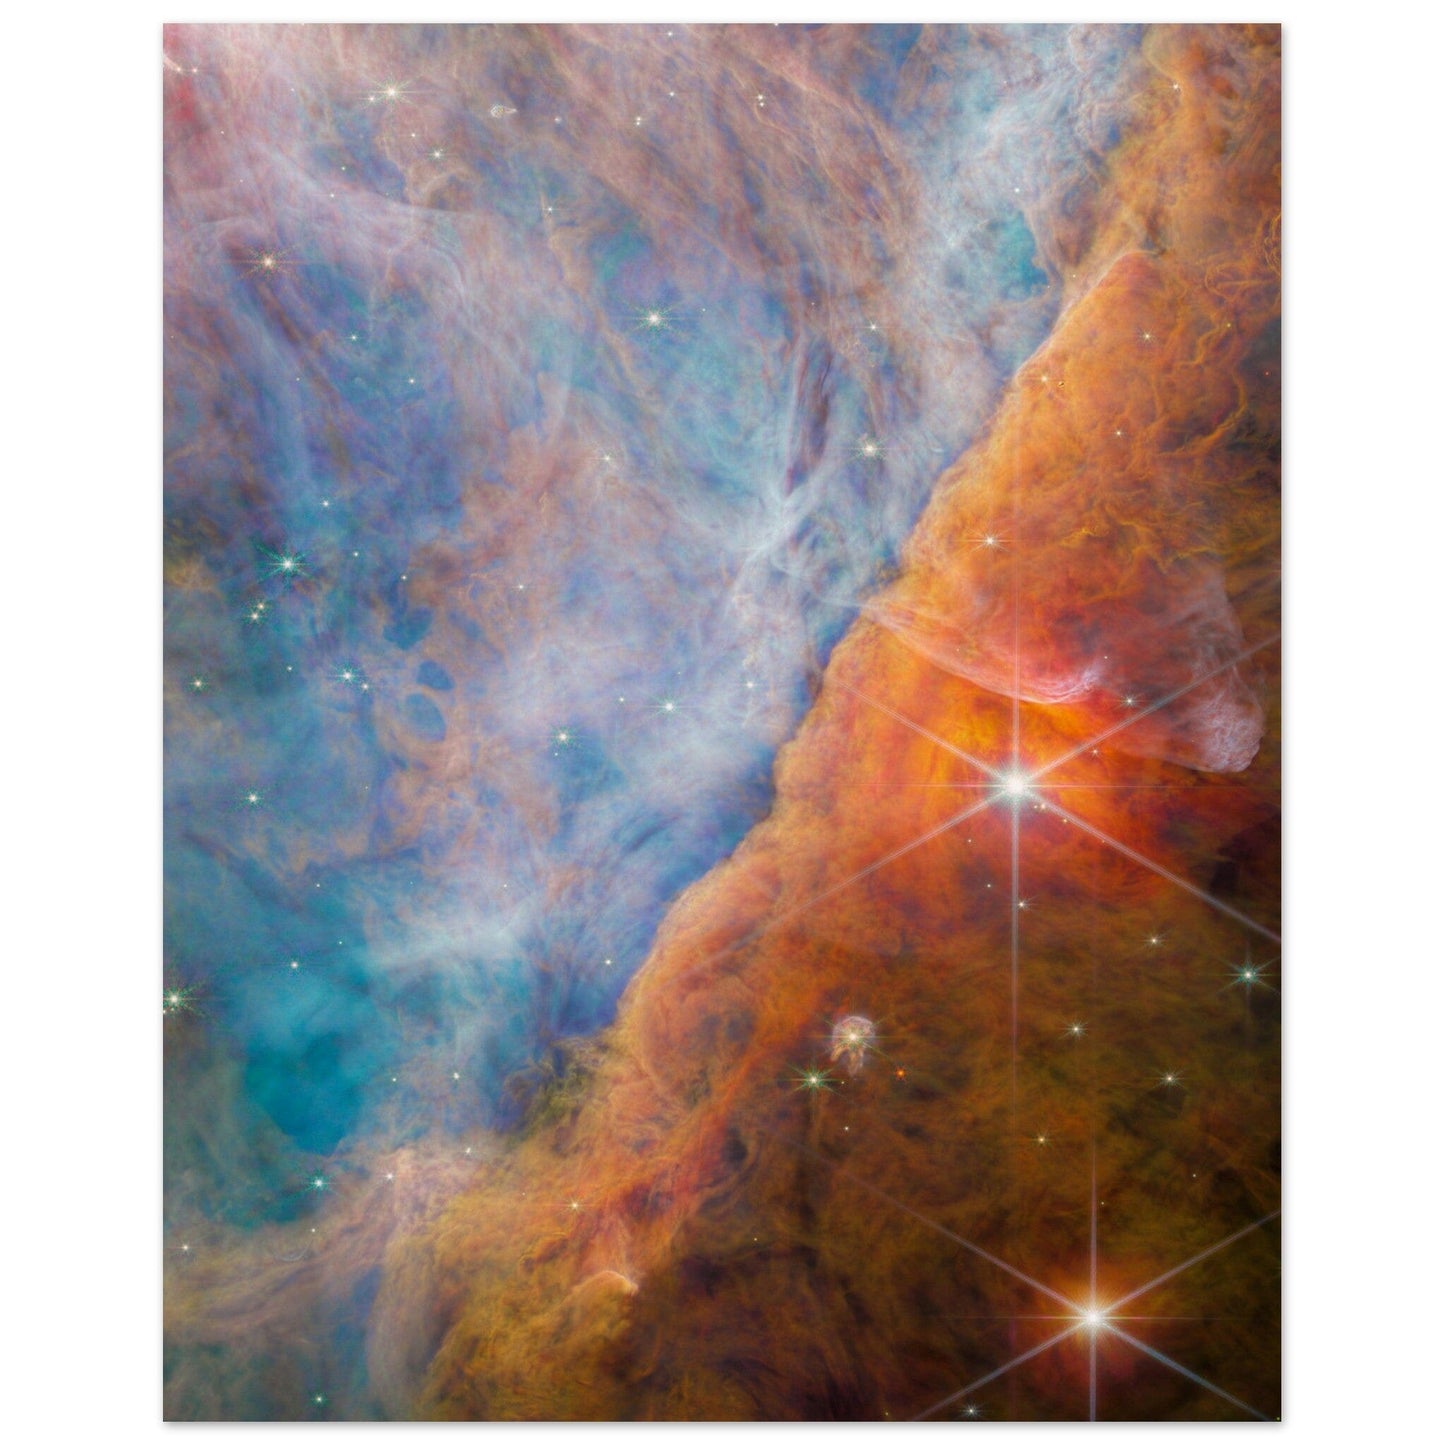 NASA - Poster - 19. Orion Bar (NIRCam Image) - James Webb Space Telescope Poster Only TP Aviation Art 40x50 cm / 16x20″ 